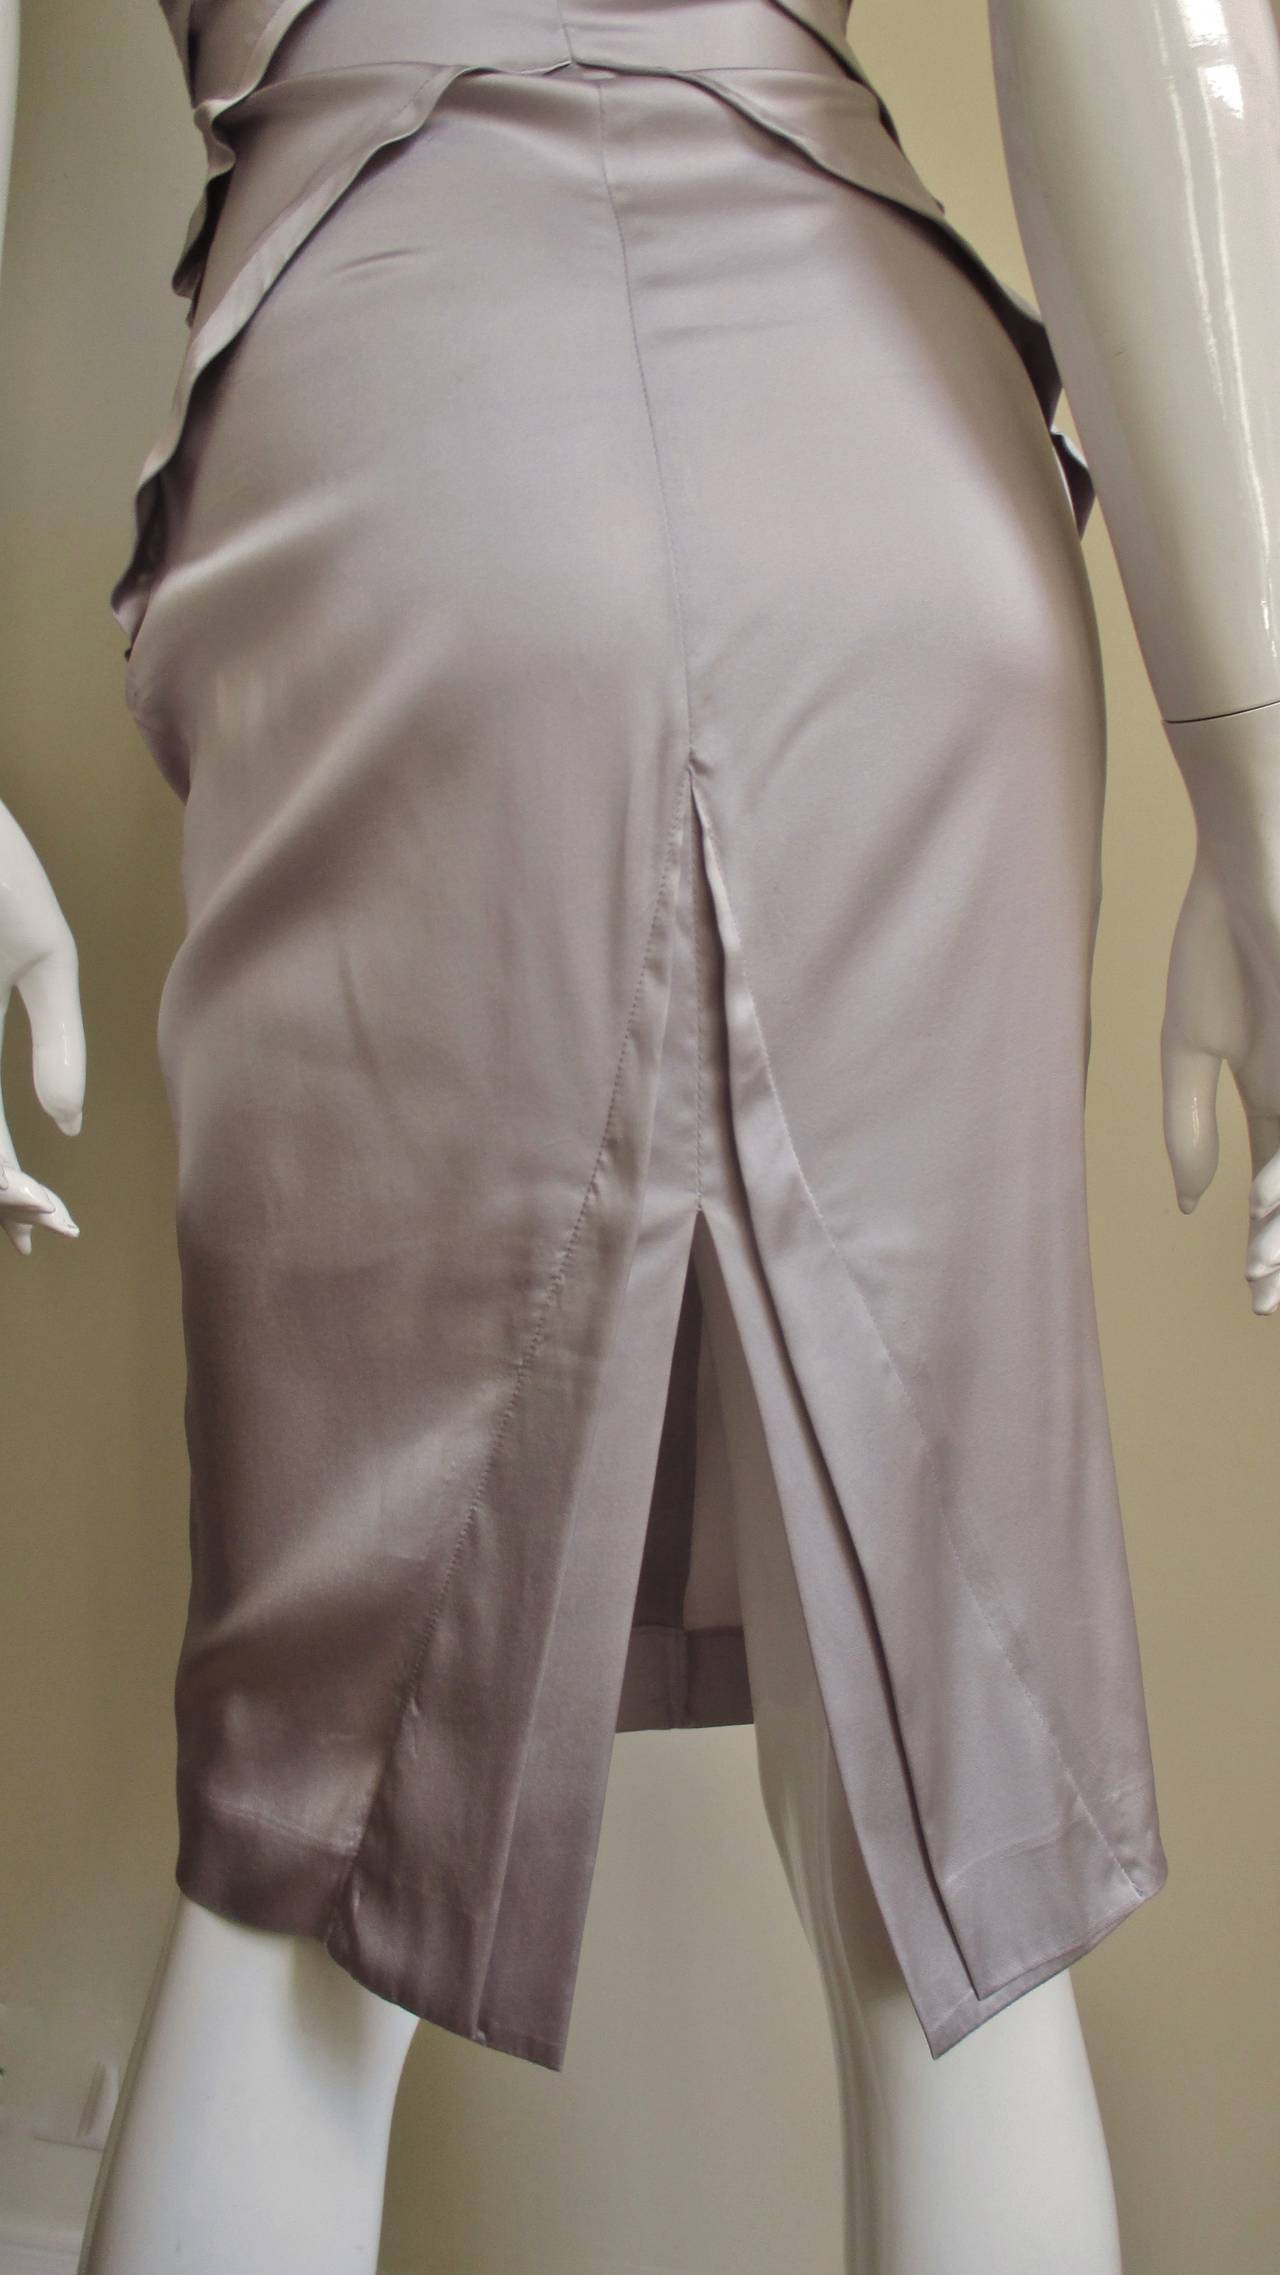  Tom Ford for Gucci Lavender Silk Halter Dress S/S 2003 For Sale 4